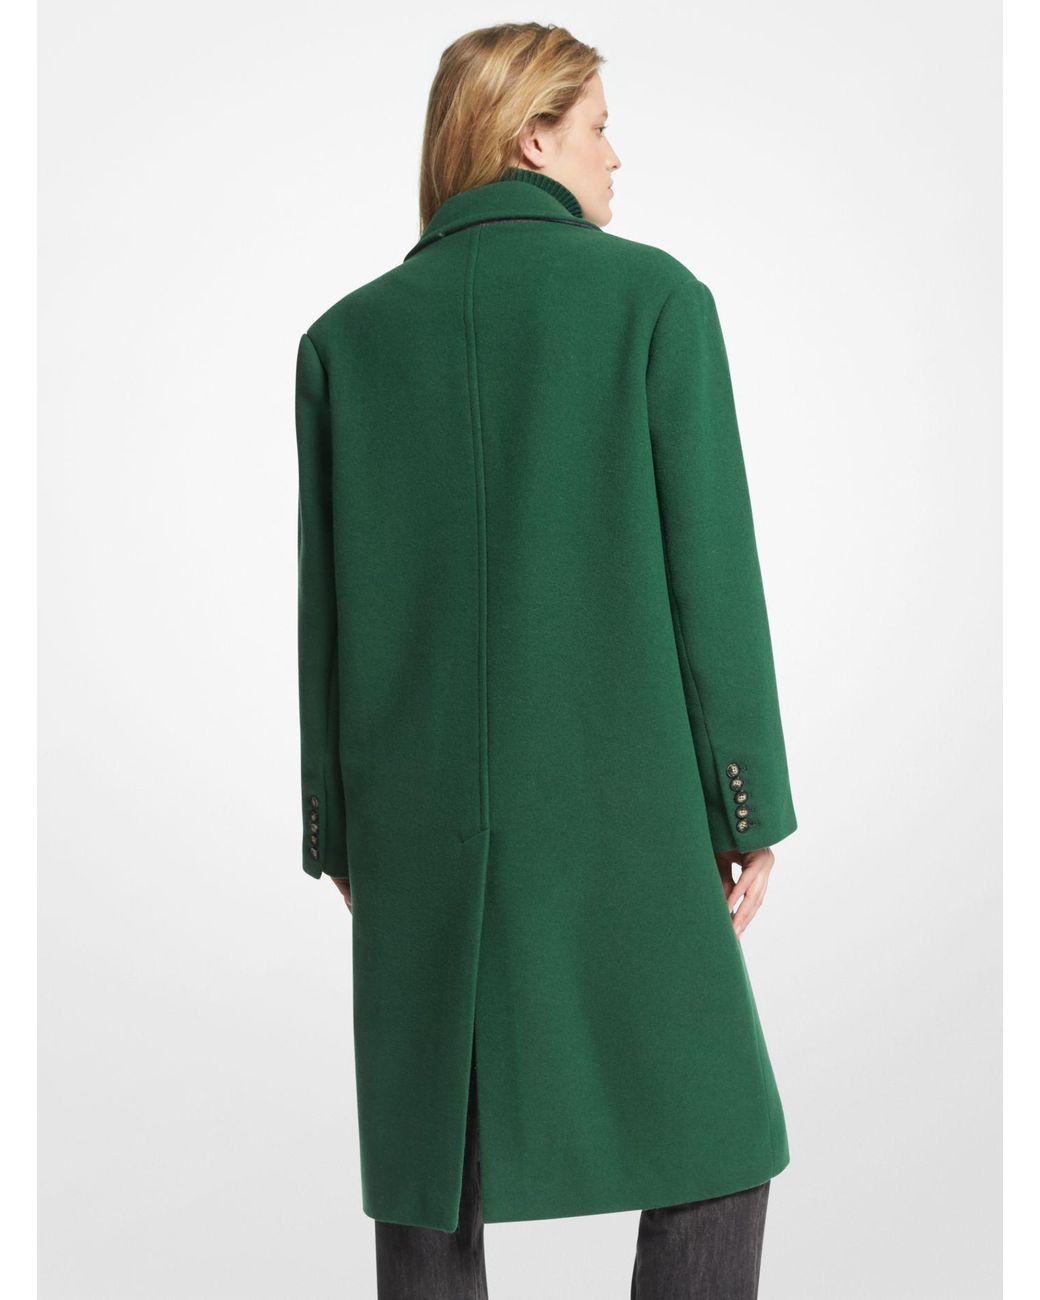 Michael Kors Wool Blend Oversized Coat in Green | Lyst